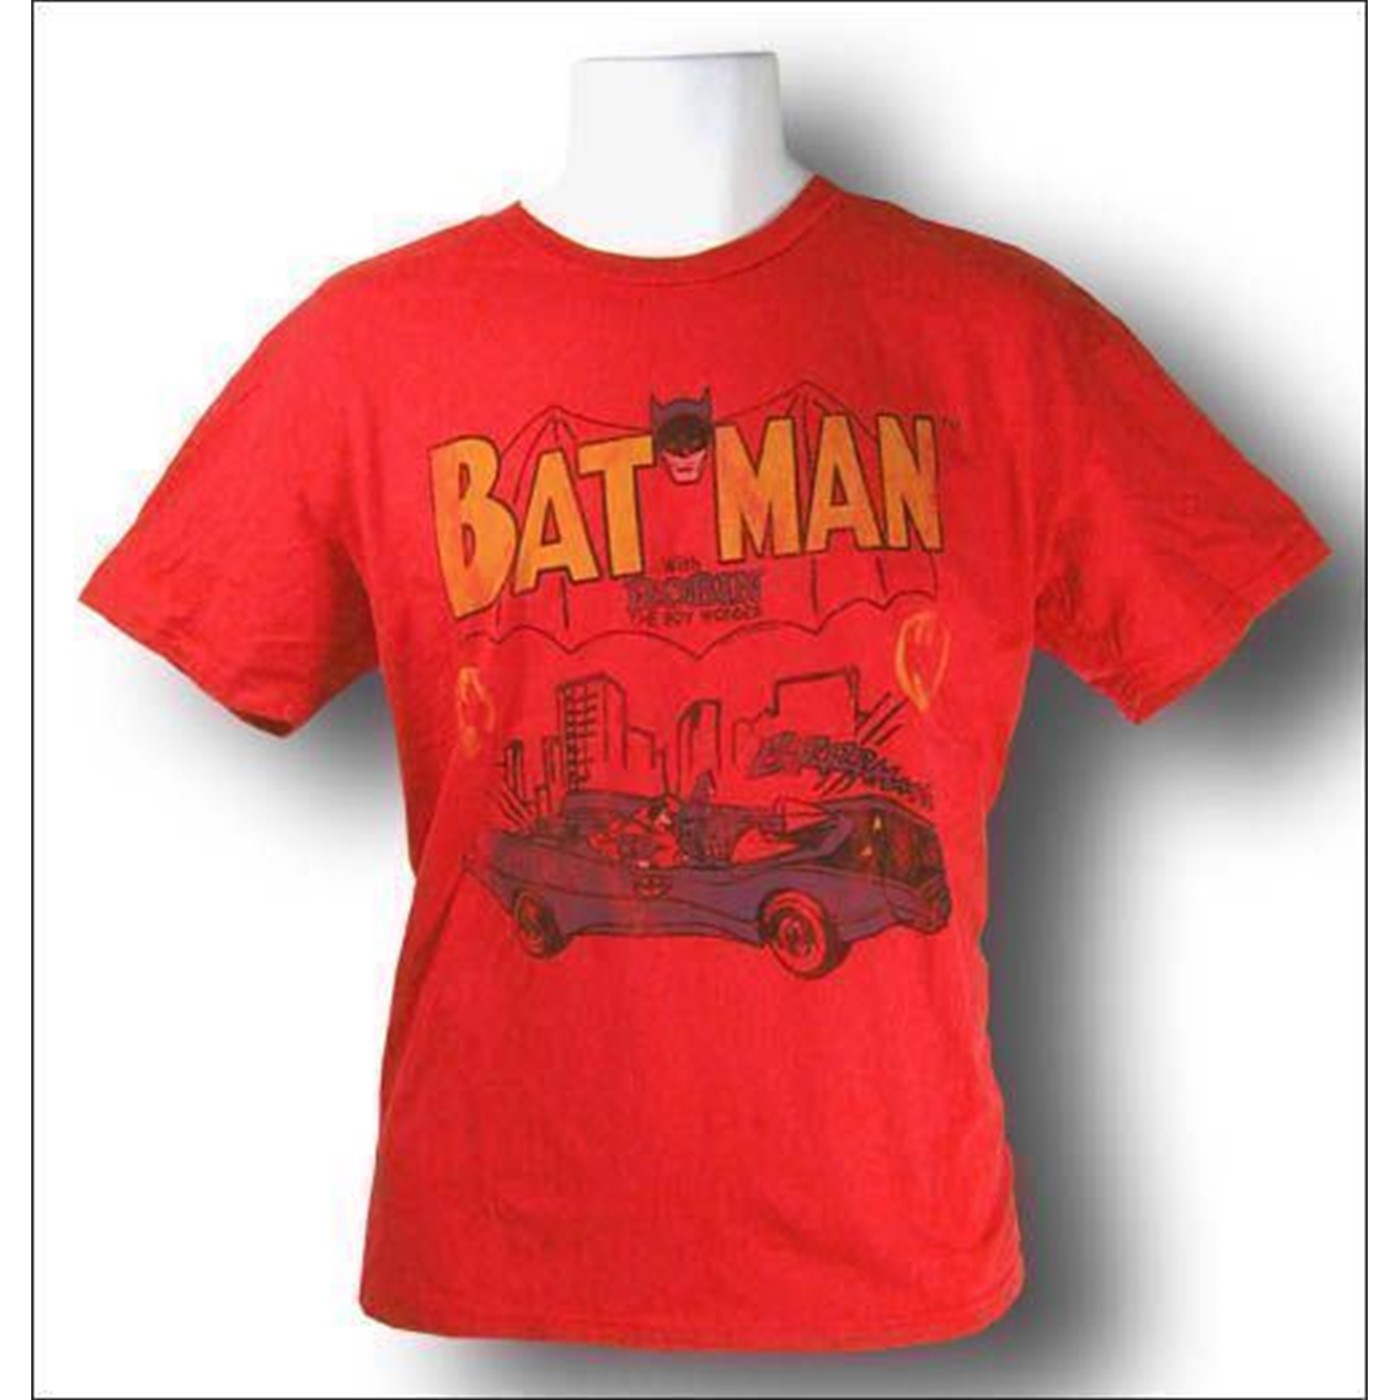 Batman & Robin Batmobile T-Shirt by Junk Food